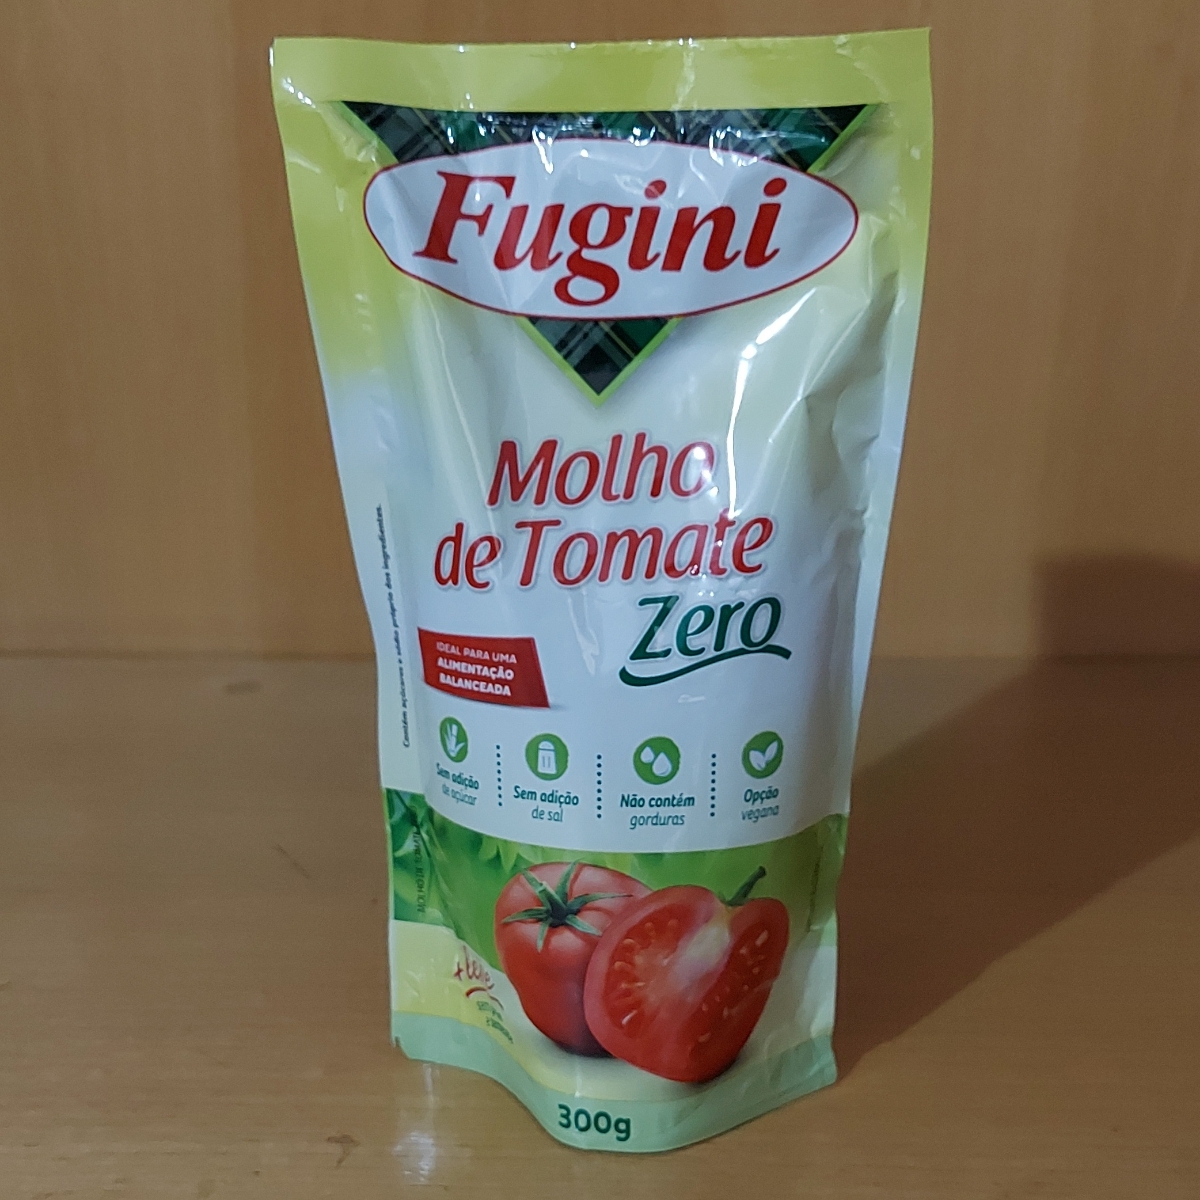 Fugini Molho De Tomate Zero Review | abillion